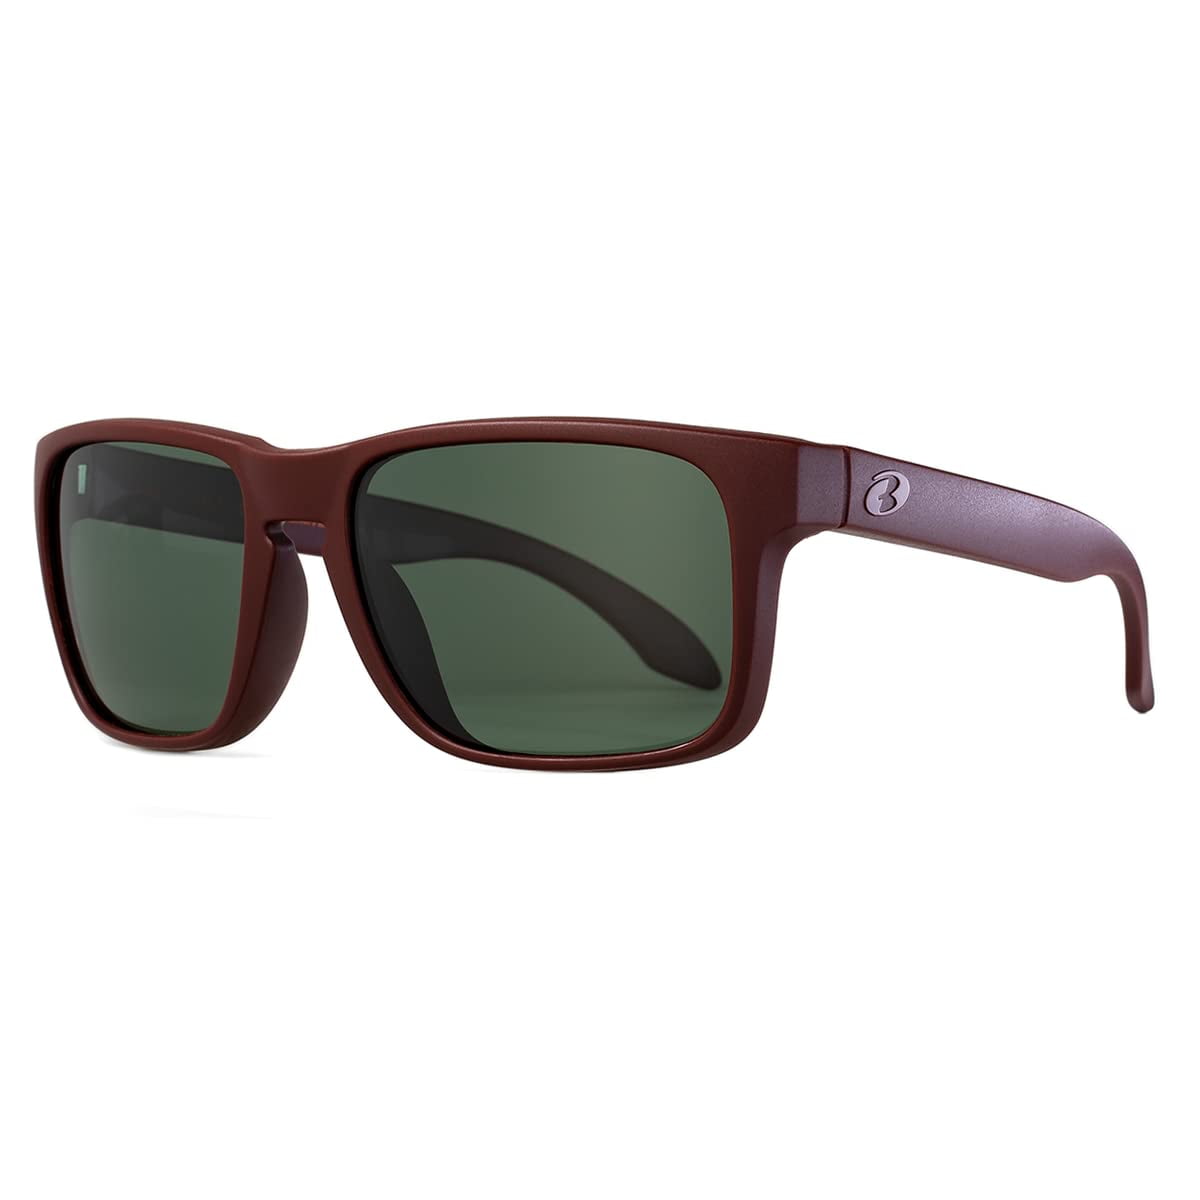 polarized option Bnus italy made classic sunglasses corning real glass lens w 